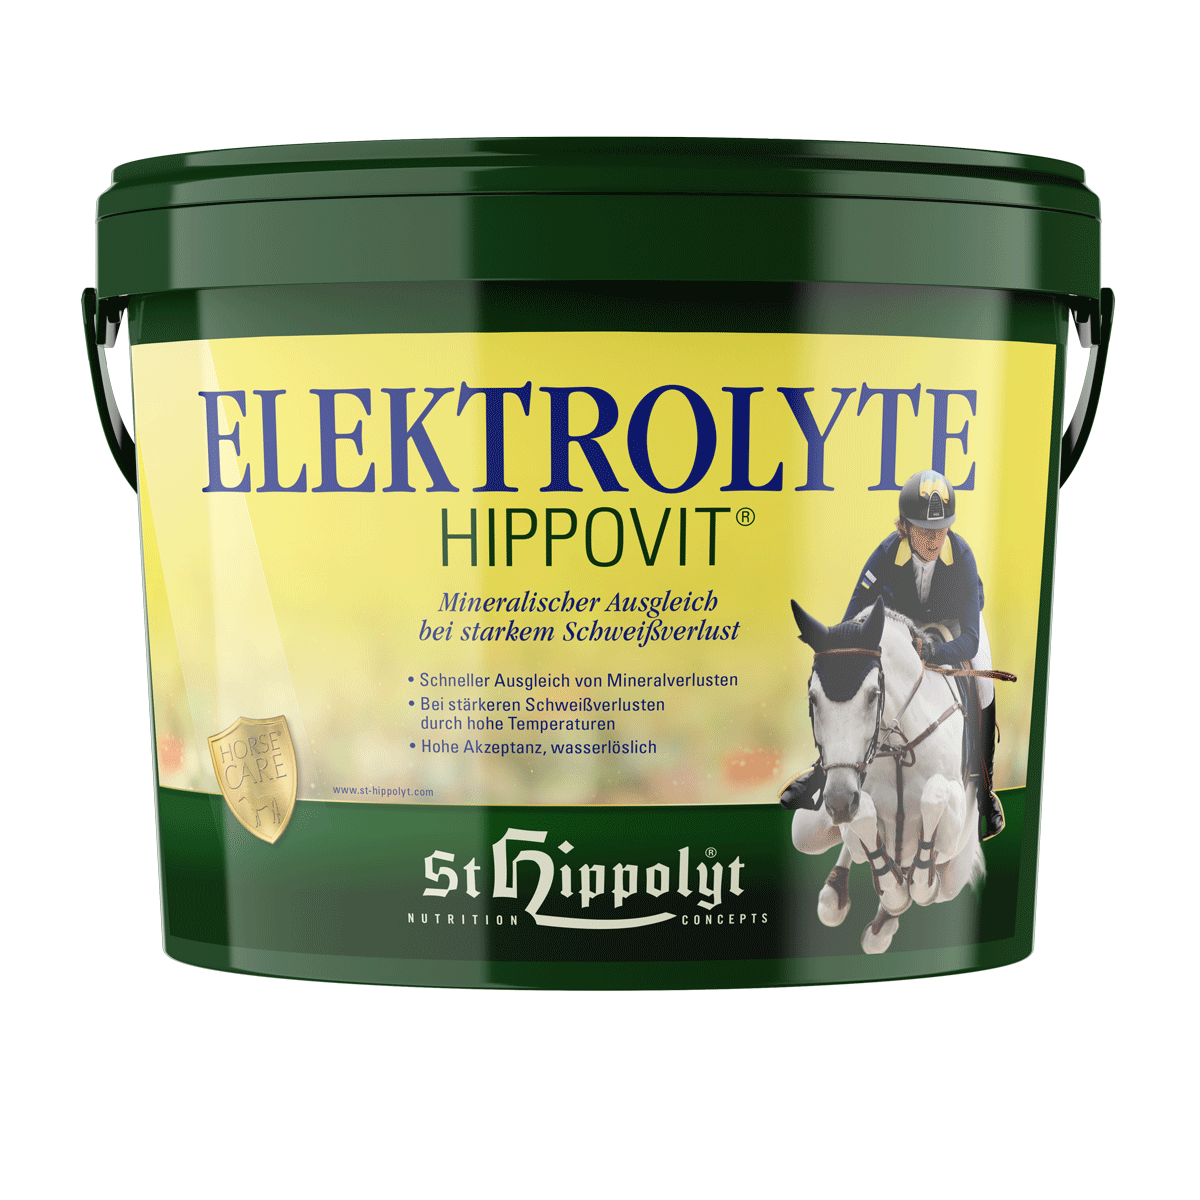 St Hippolyt Elektrolyte 10 kg